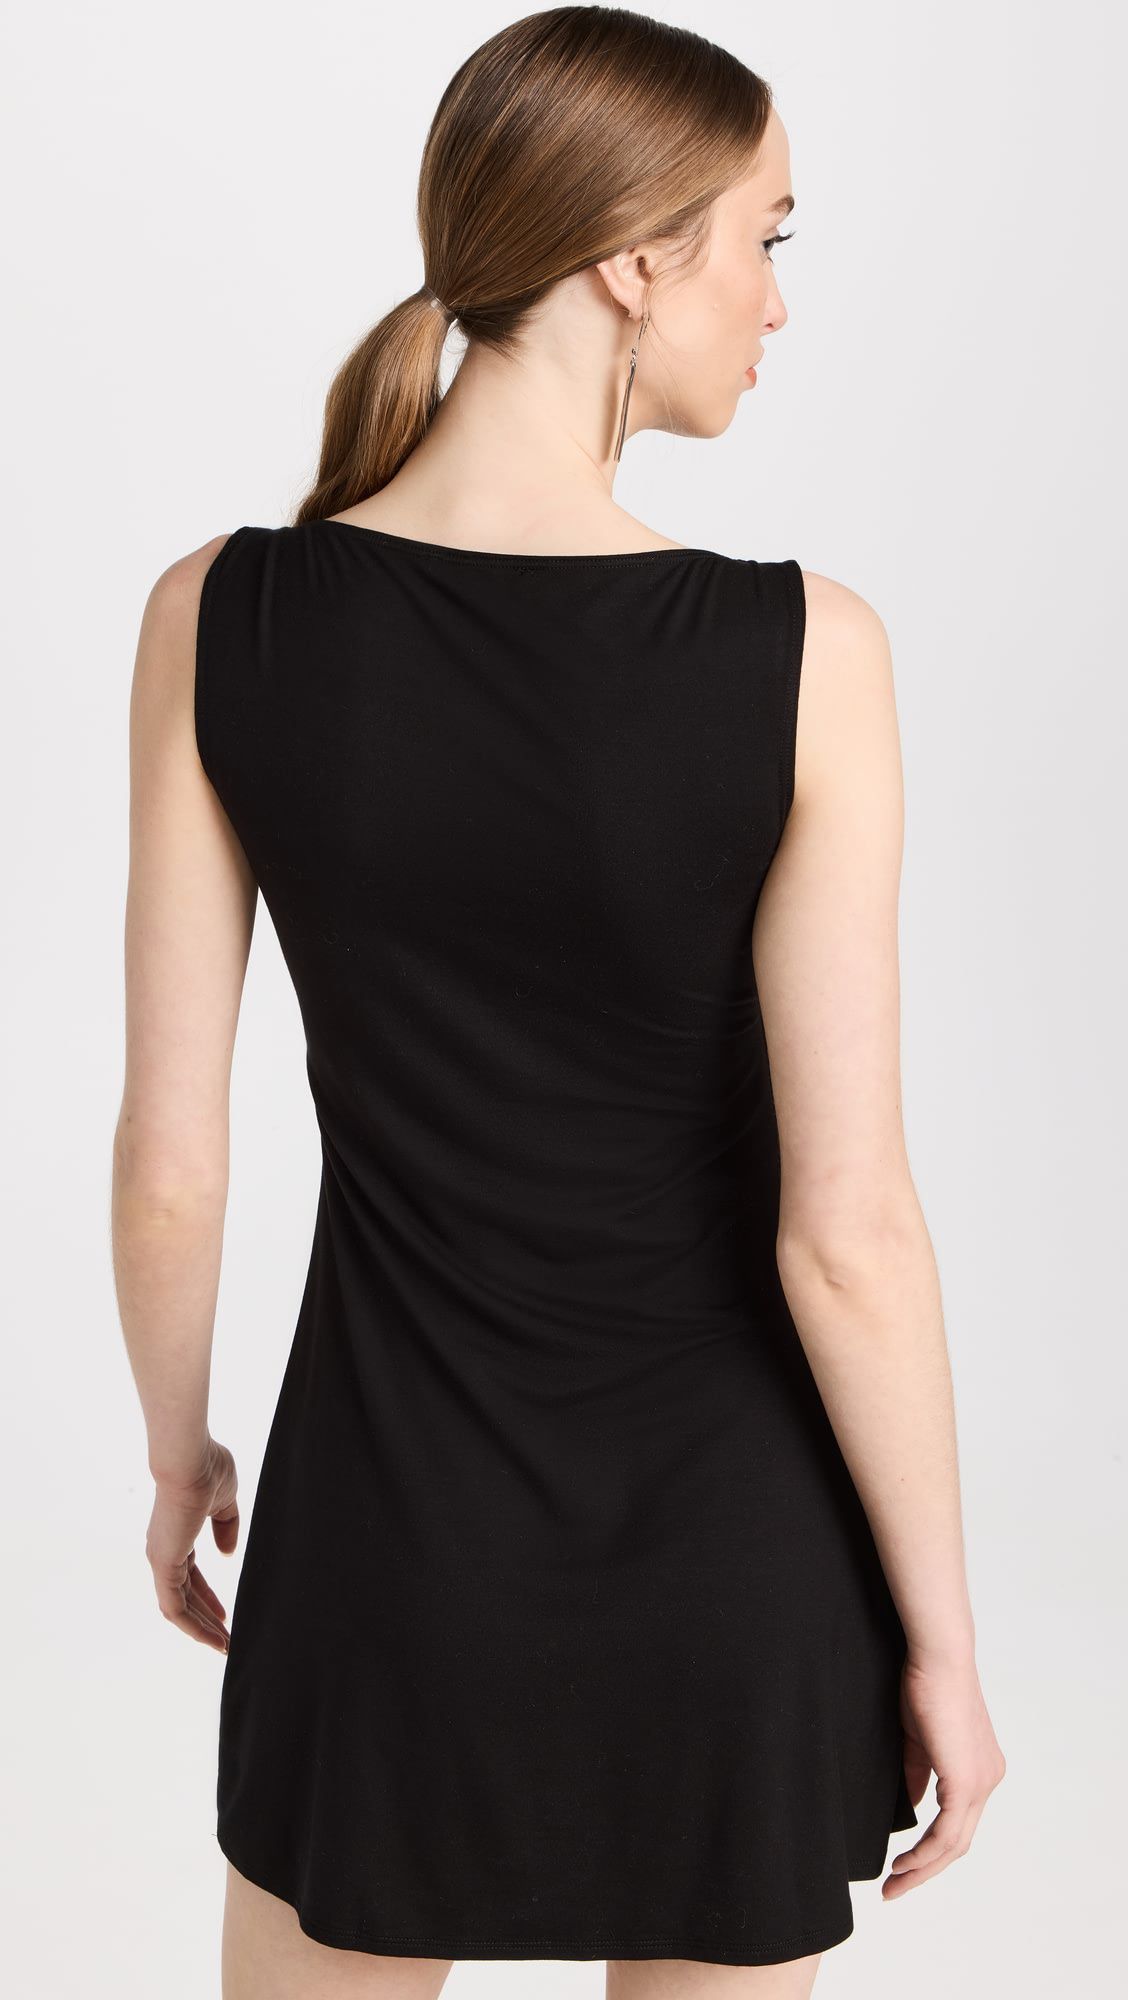 ODM Elegant black halter dress with plunging collar